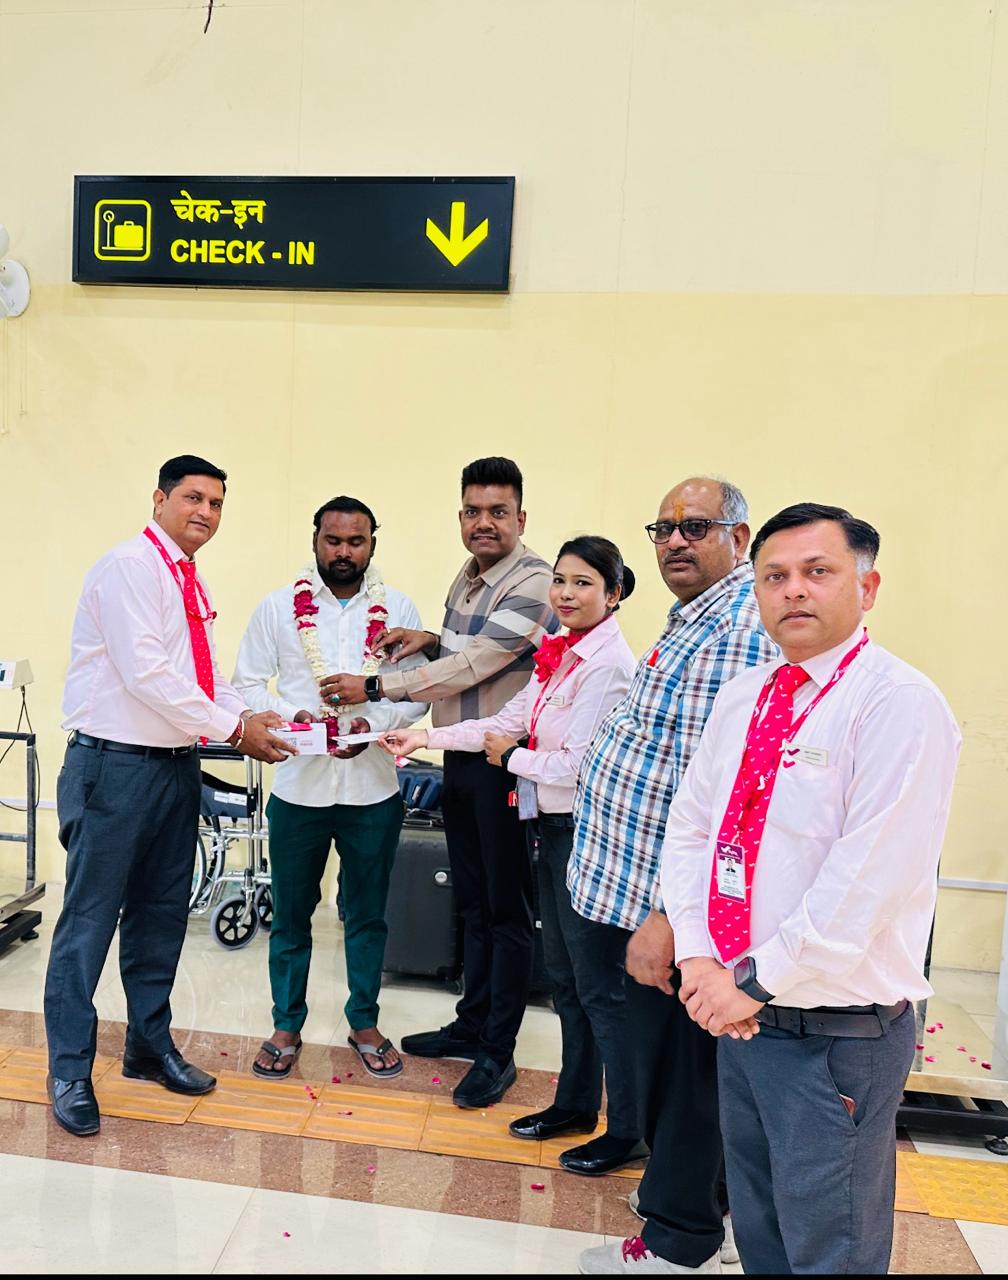 FlyBig Launches ₹99 Airfare Scheme in UP under ‘Udaan Har Kisi Ke Sapnon Ko Pankh De’ Campaign